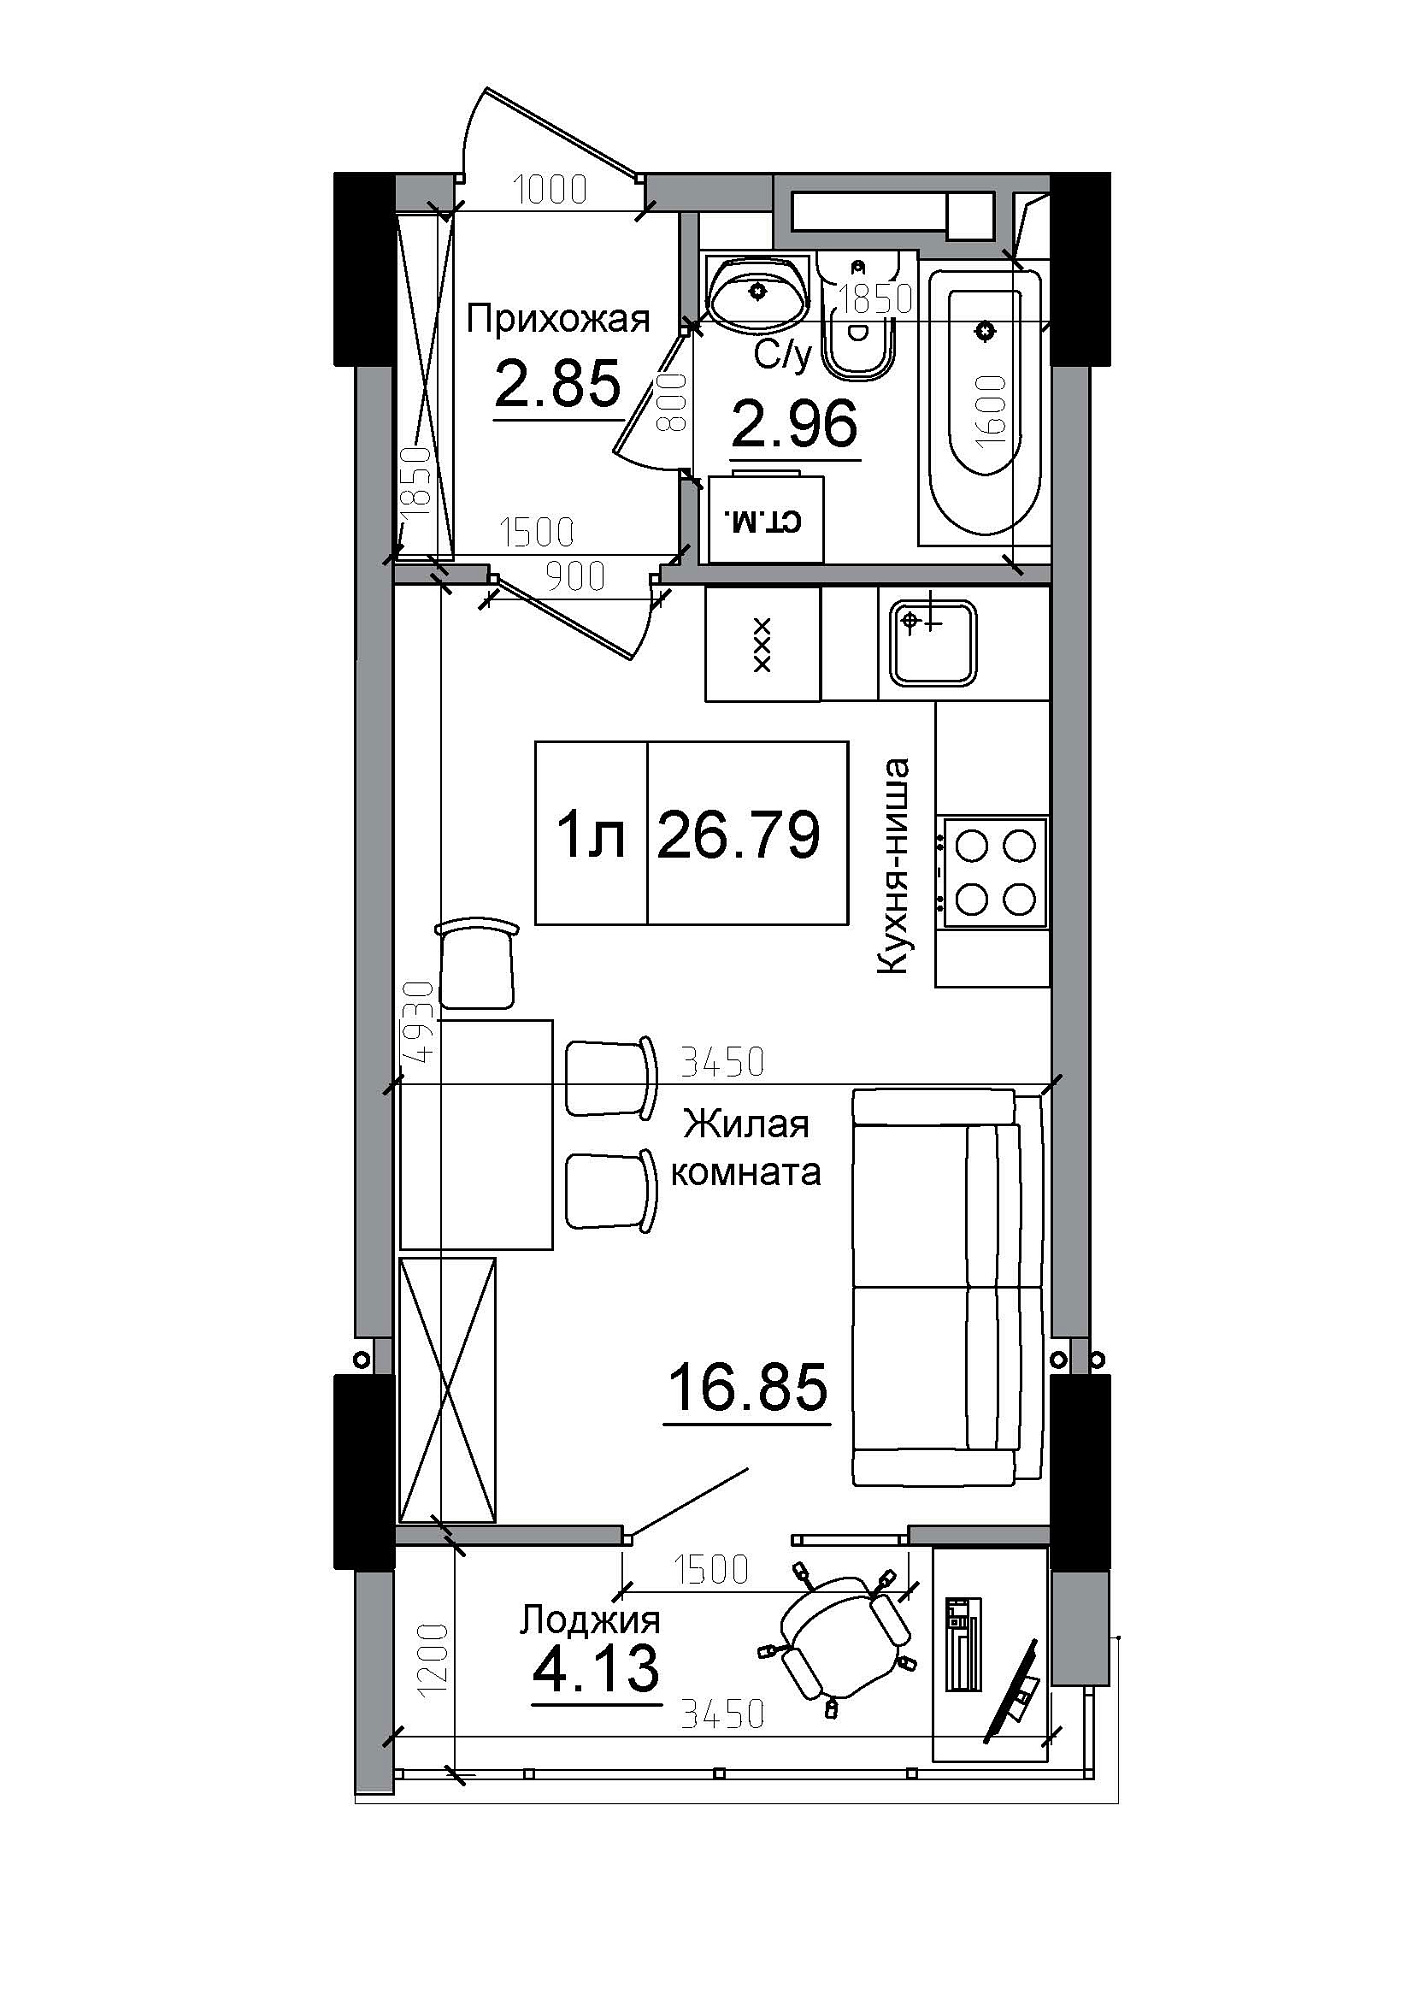 Планировка Smart-квартира площей 26.79м2, AB-12-06/00014.